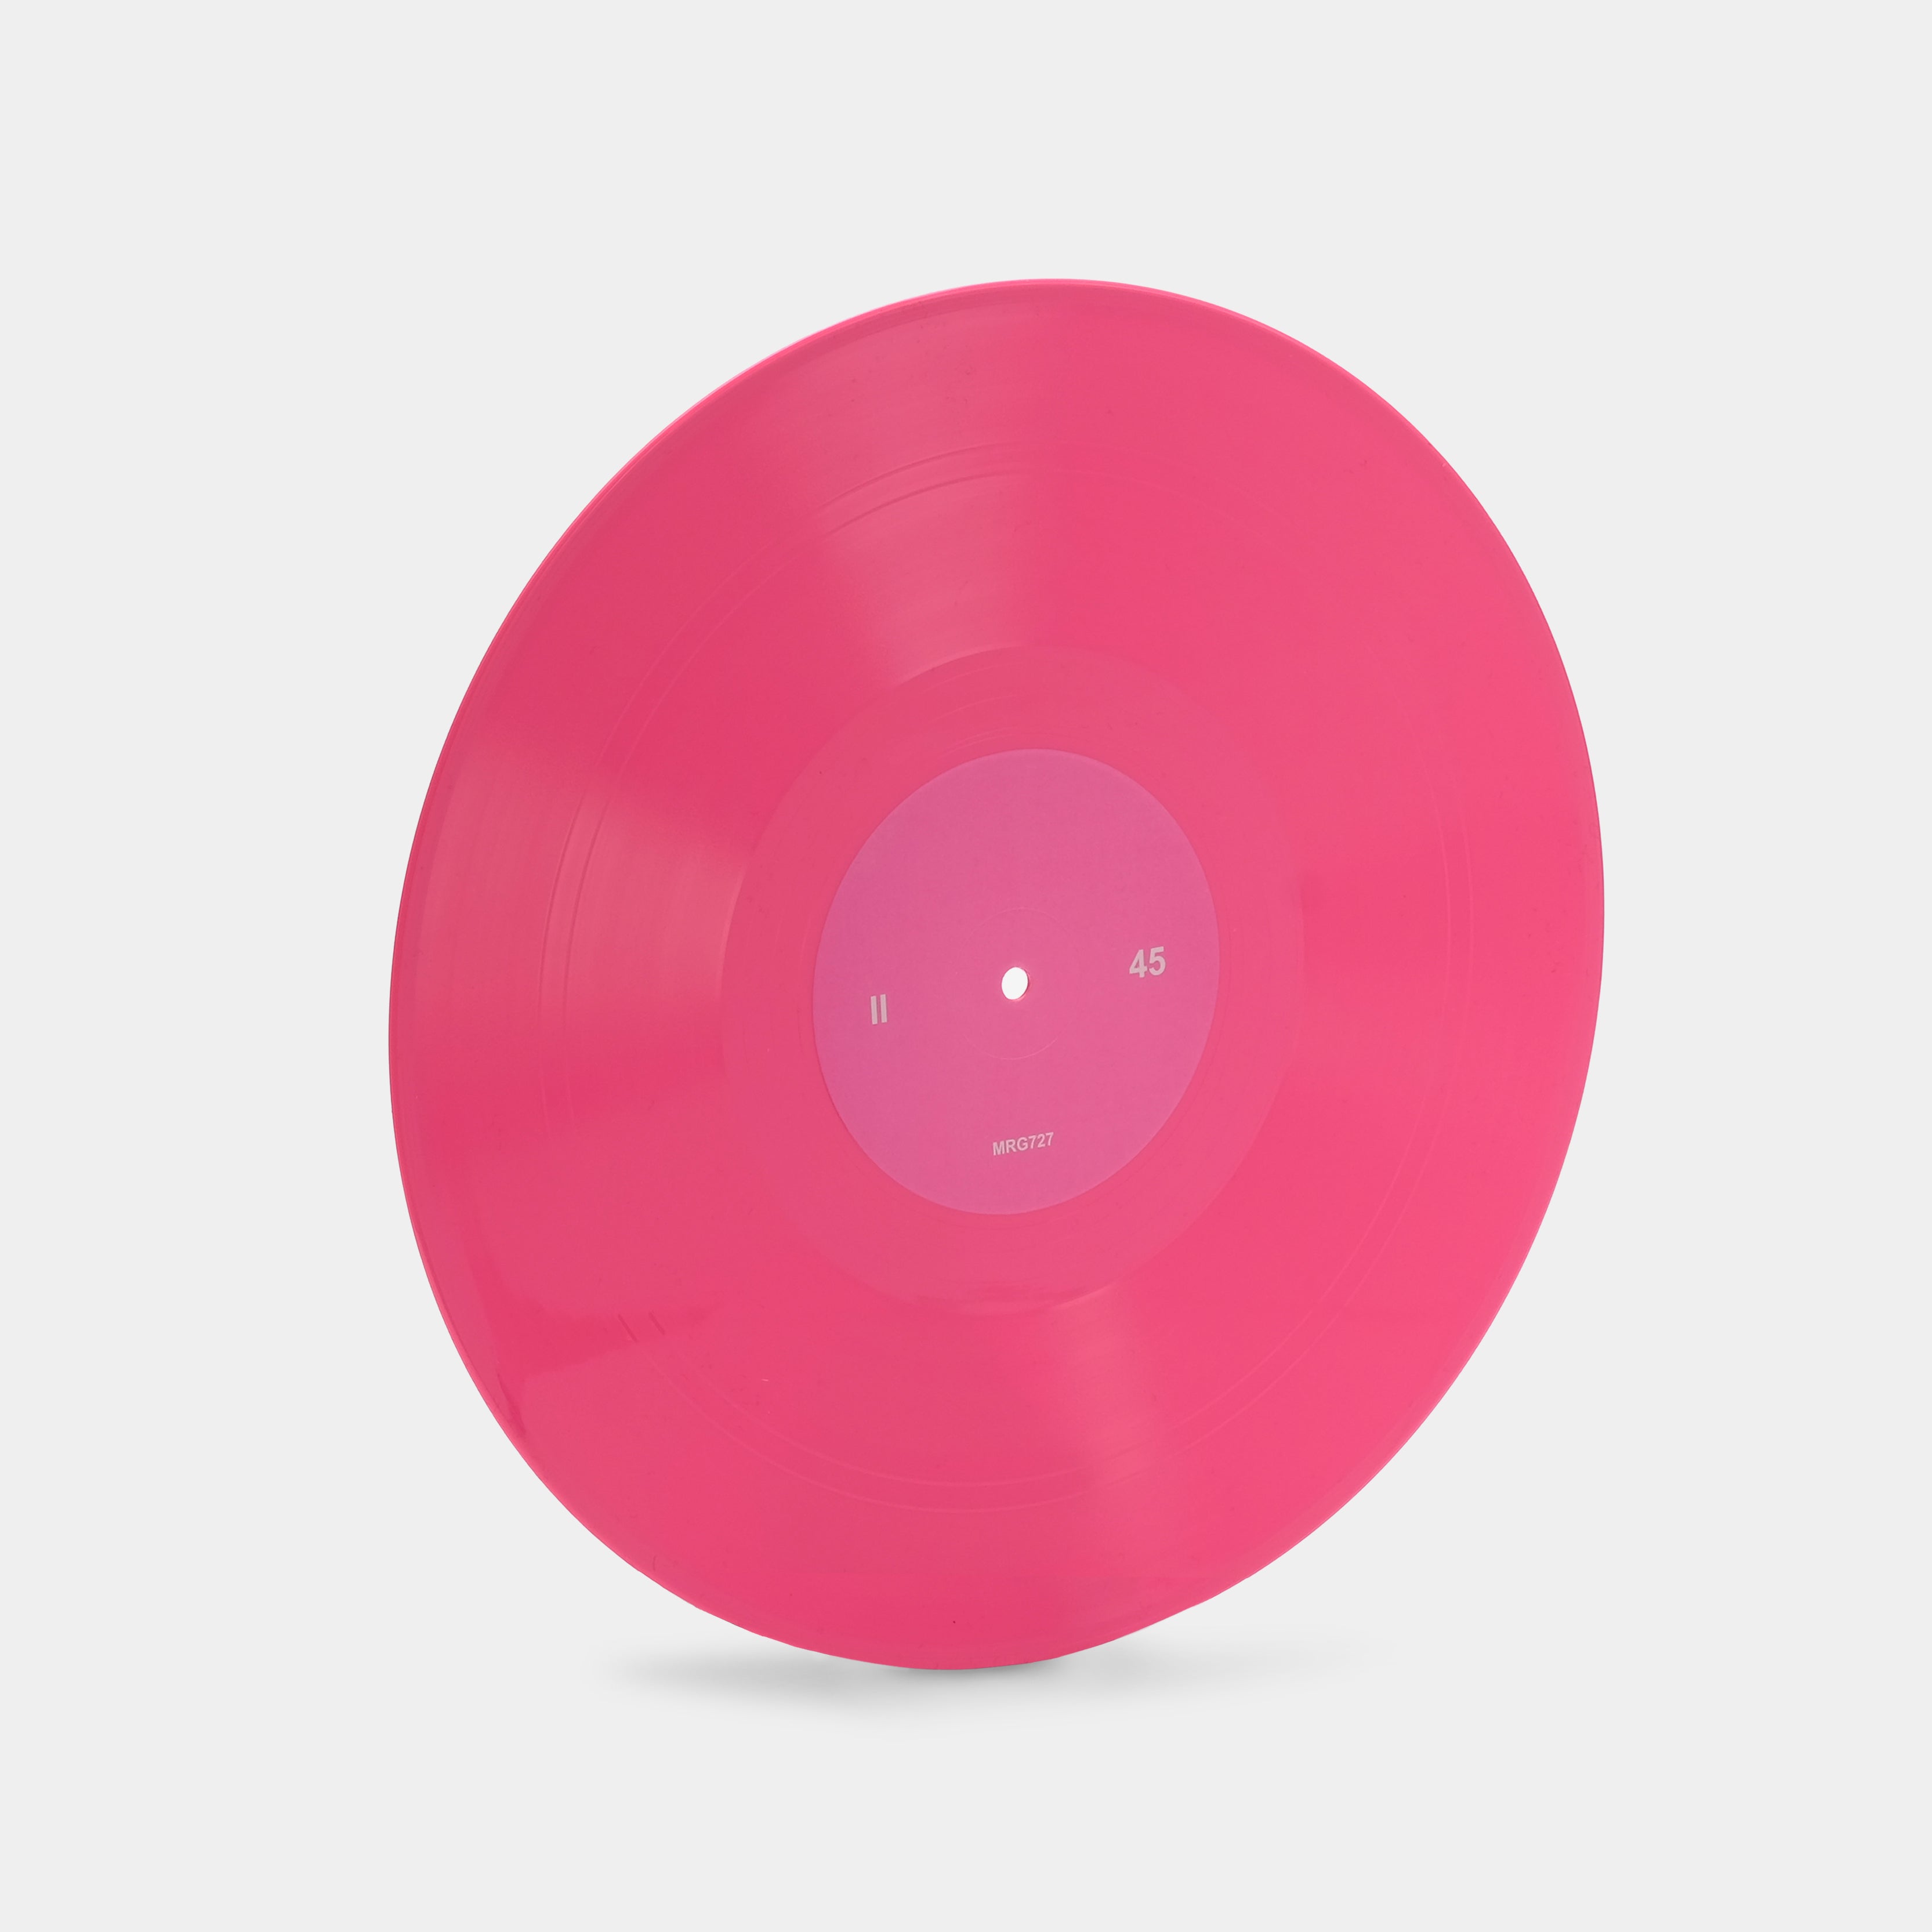 Wye Oak - No Horizon EP Pink Vinyl Record